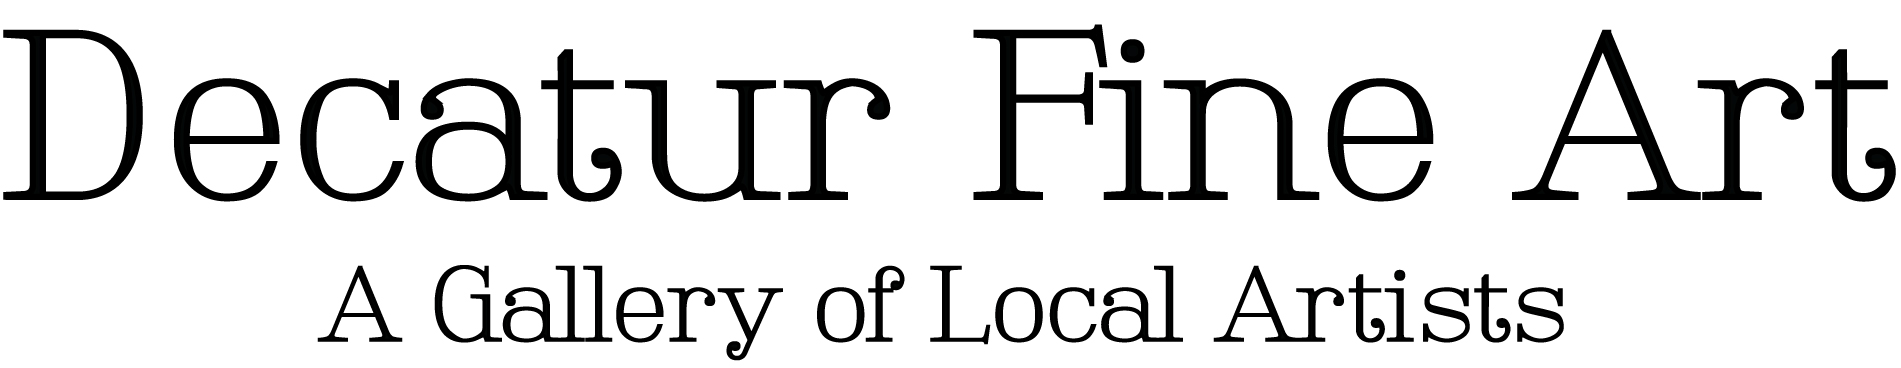 Decatur Fine Art logo